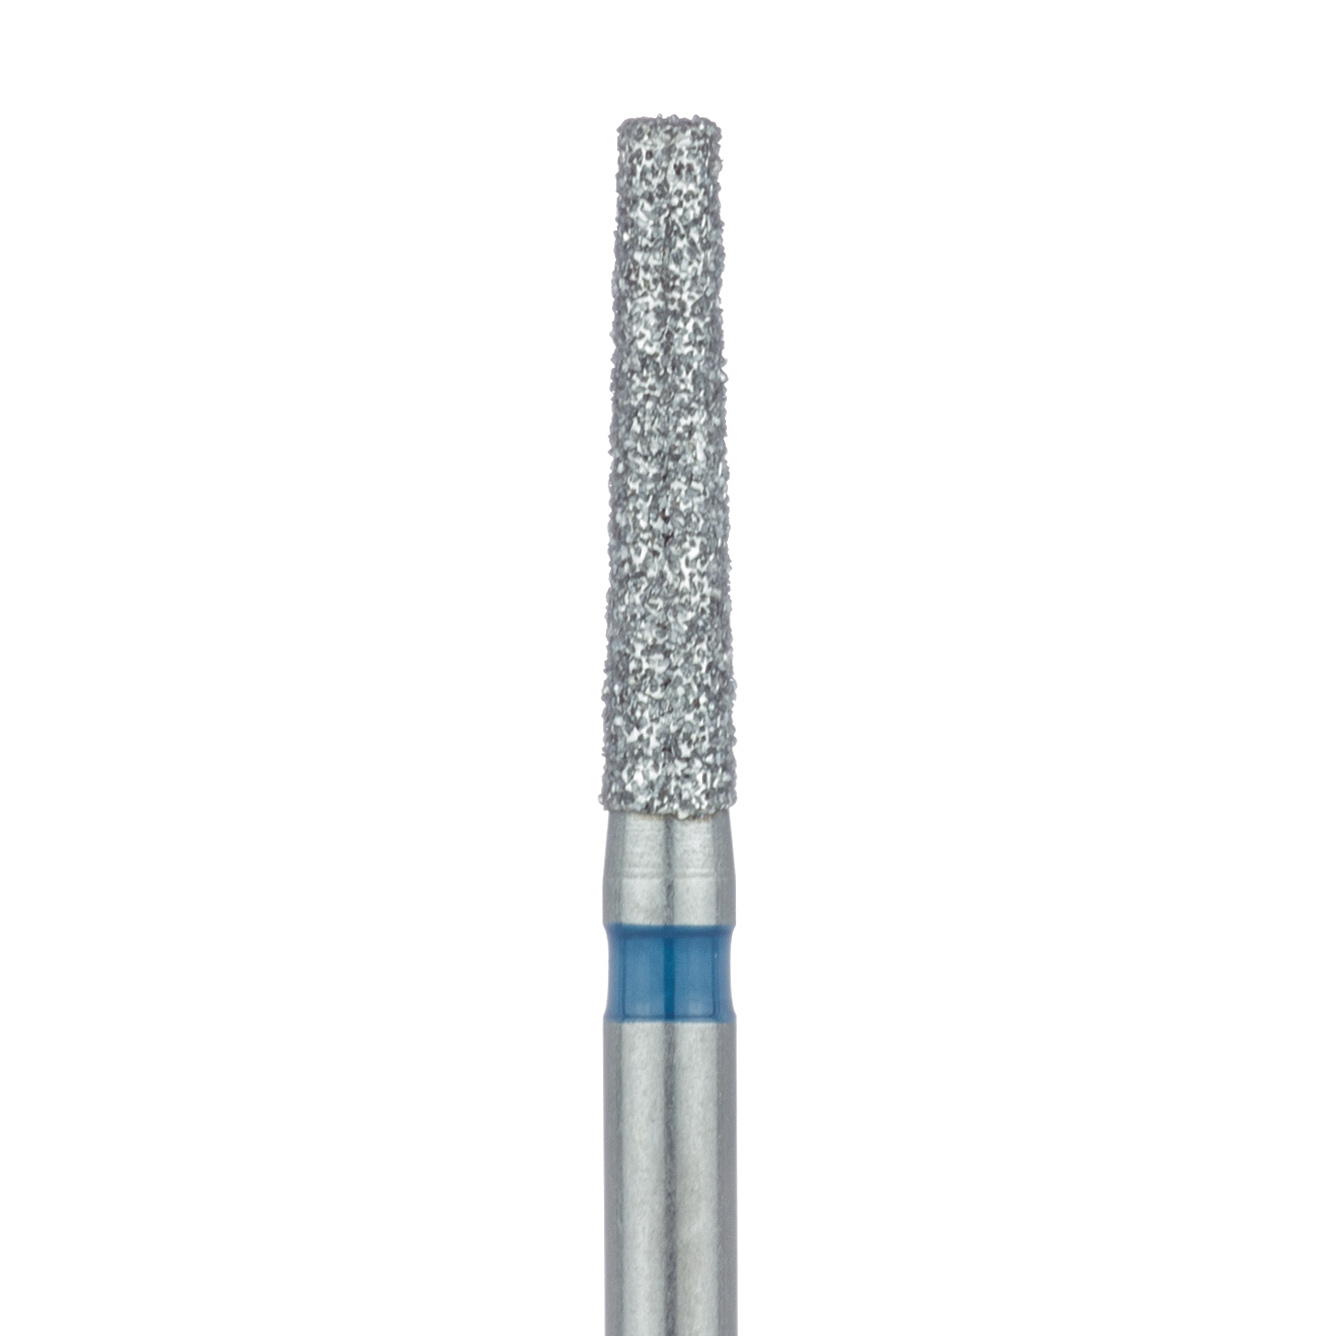 847-016-FG Long Tapered Flat End Diamond Bur, 1.6mm Medium FG